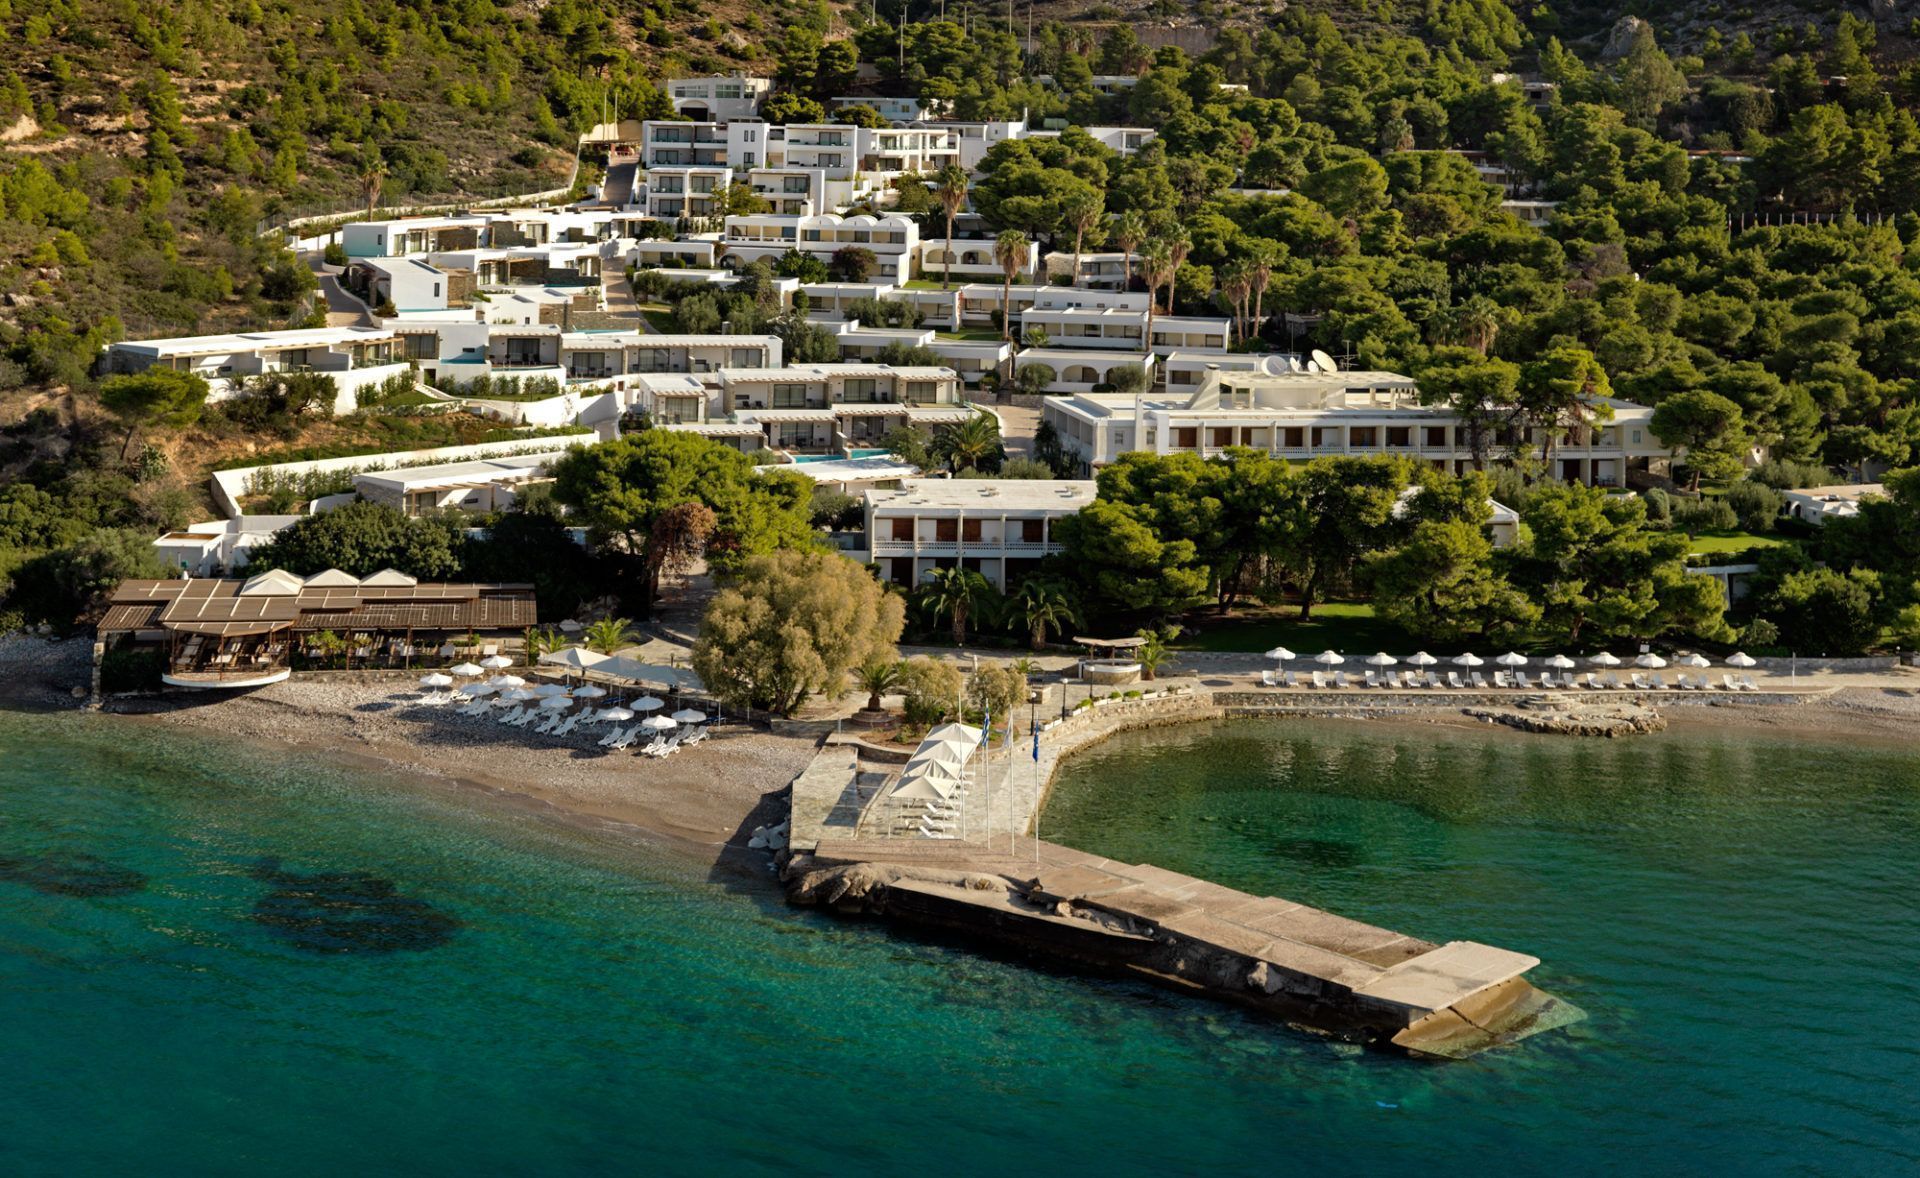 Ramada and Wyndham Loutraki Poseidon Resort, combined view of both resorts.